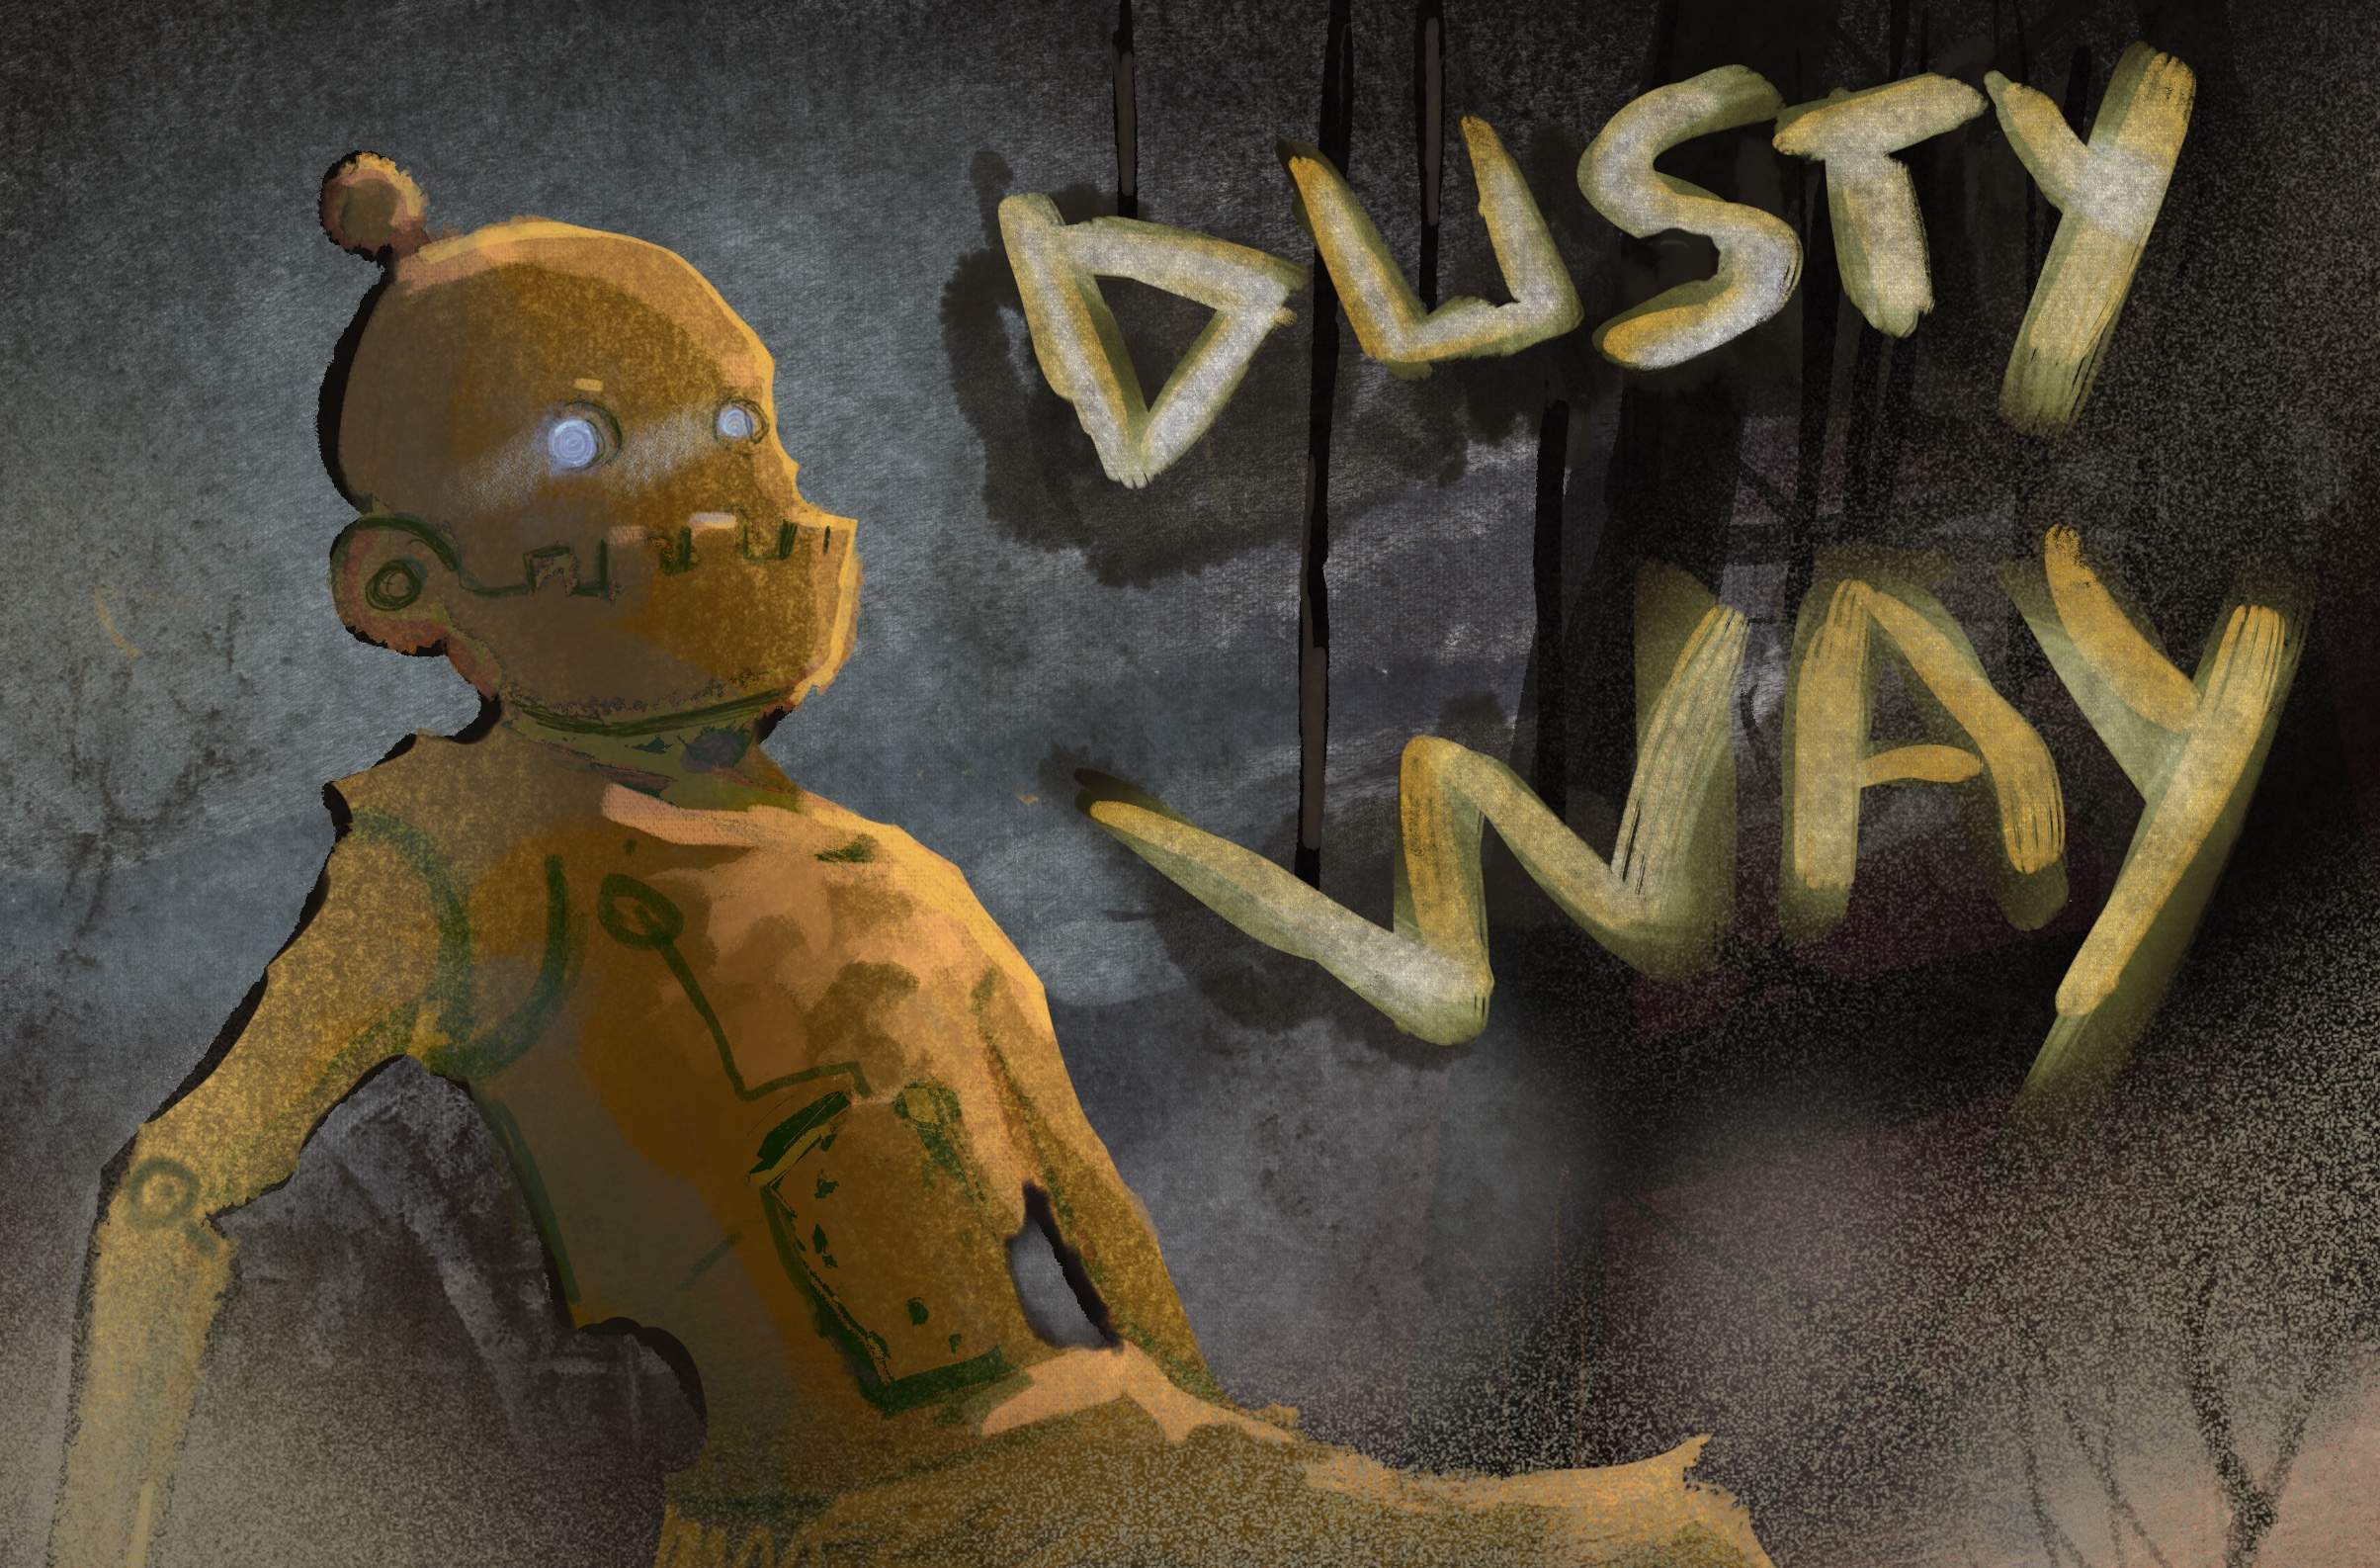 Dusty way